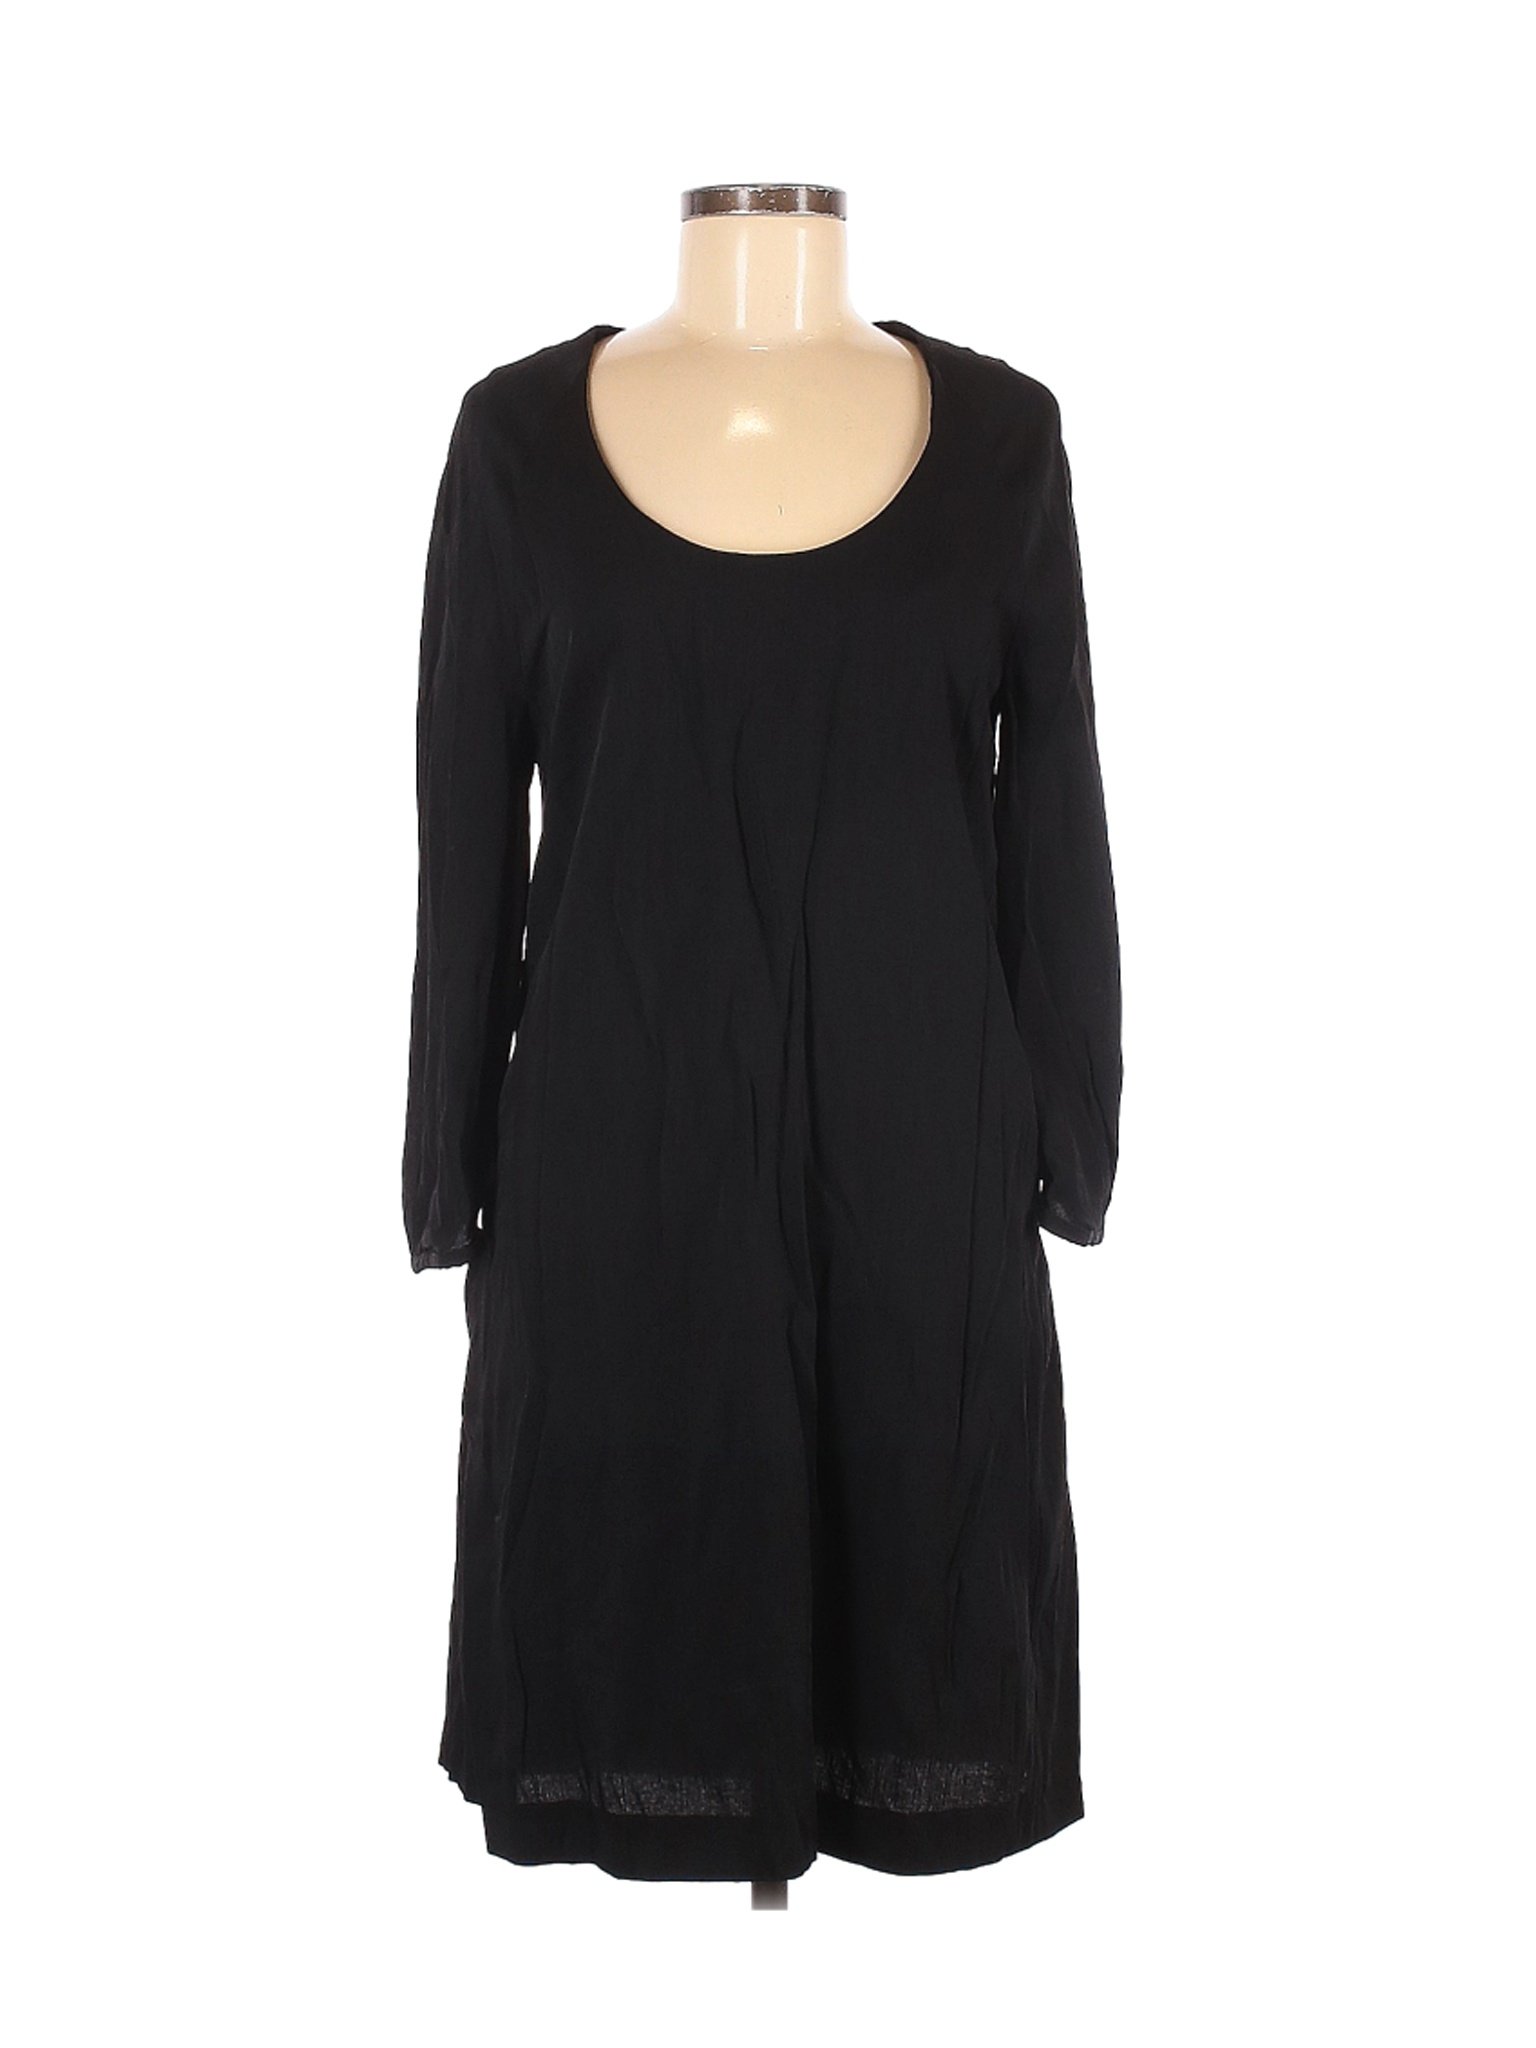 Zara Basic Women Black Casual Dress M | eBay